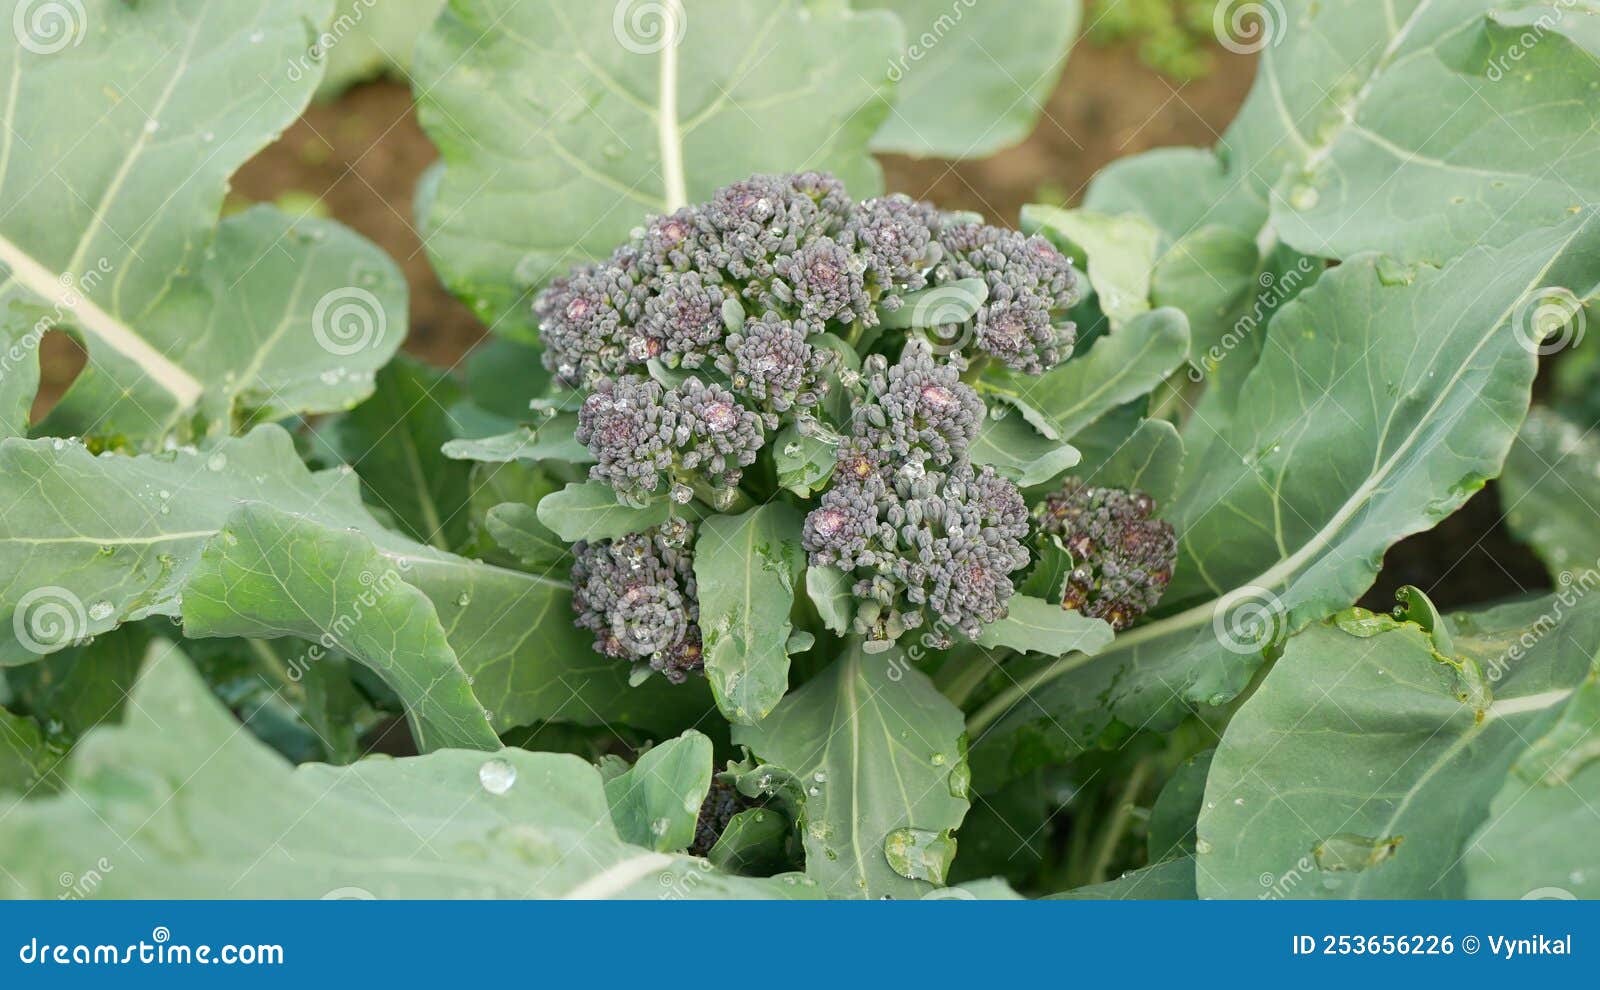 Broccoli Vegetable Bio Leaf Green Brassica Oleracea Italica Crop Farmer  Farming Greenhouse Folio Agricultural Farm Stock Photo - Image of harvest,  fruit: 253656226